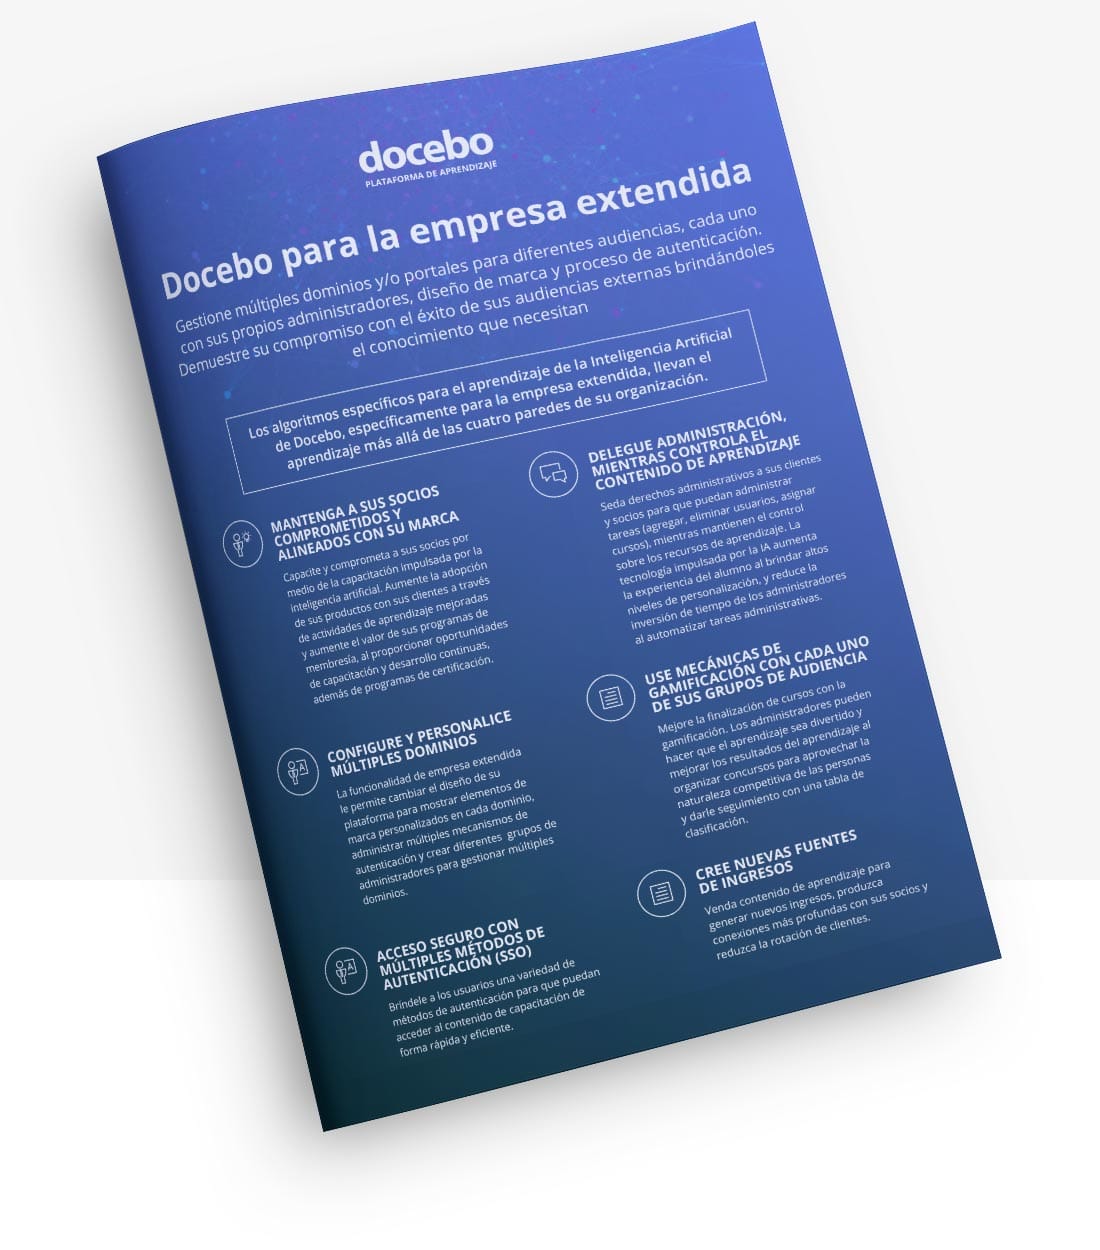 Capacite a clientes, socios y miembros de asociación con Docebo para la empresa extendida